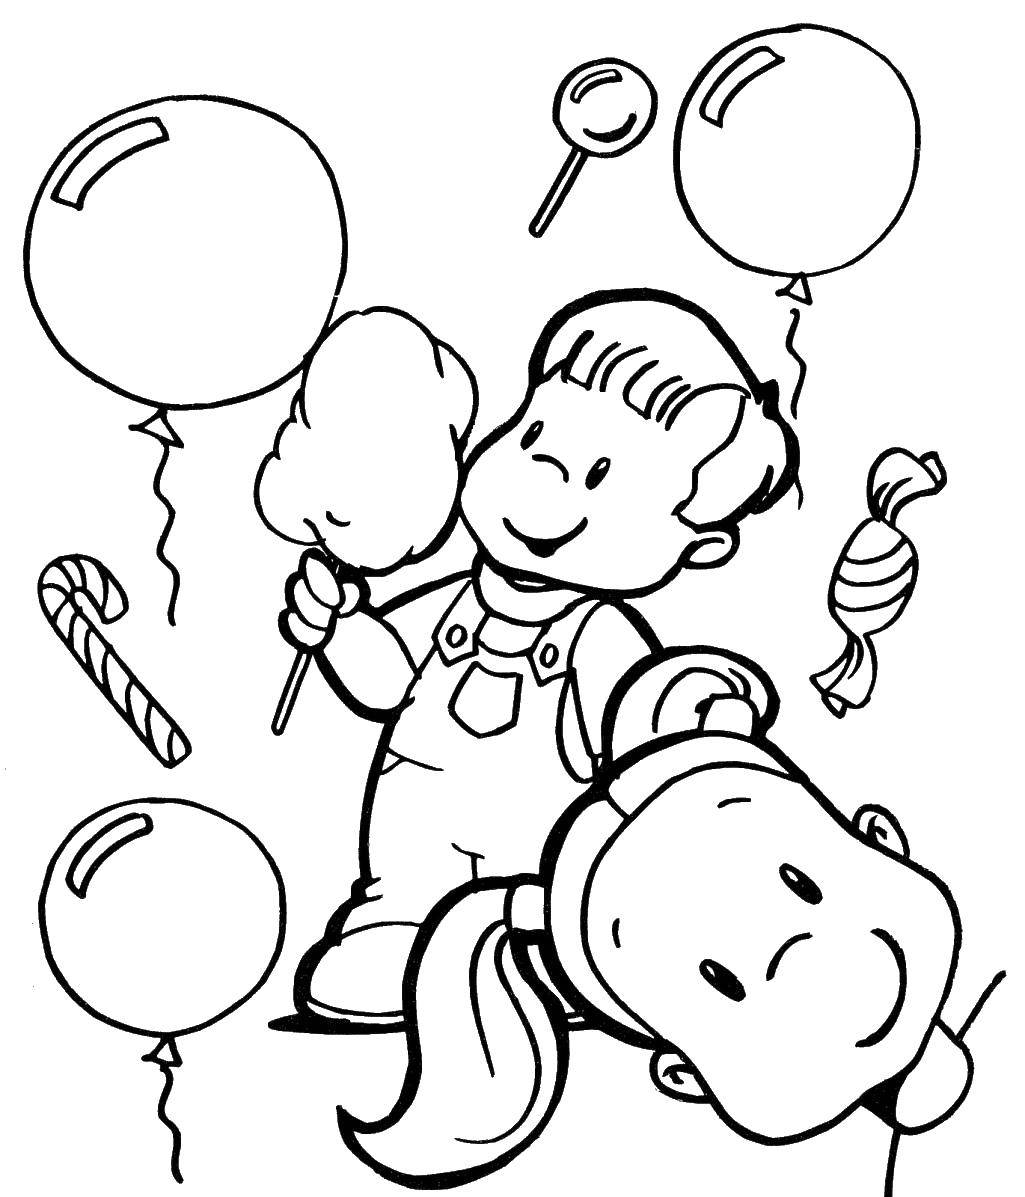 Название: Раскраска Дети и сладкая вата с шариками. Категория: дети. Теги: дети, шарики, вата.